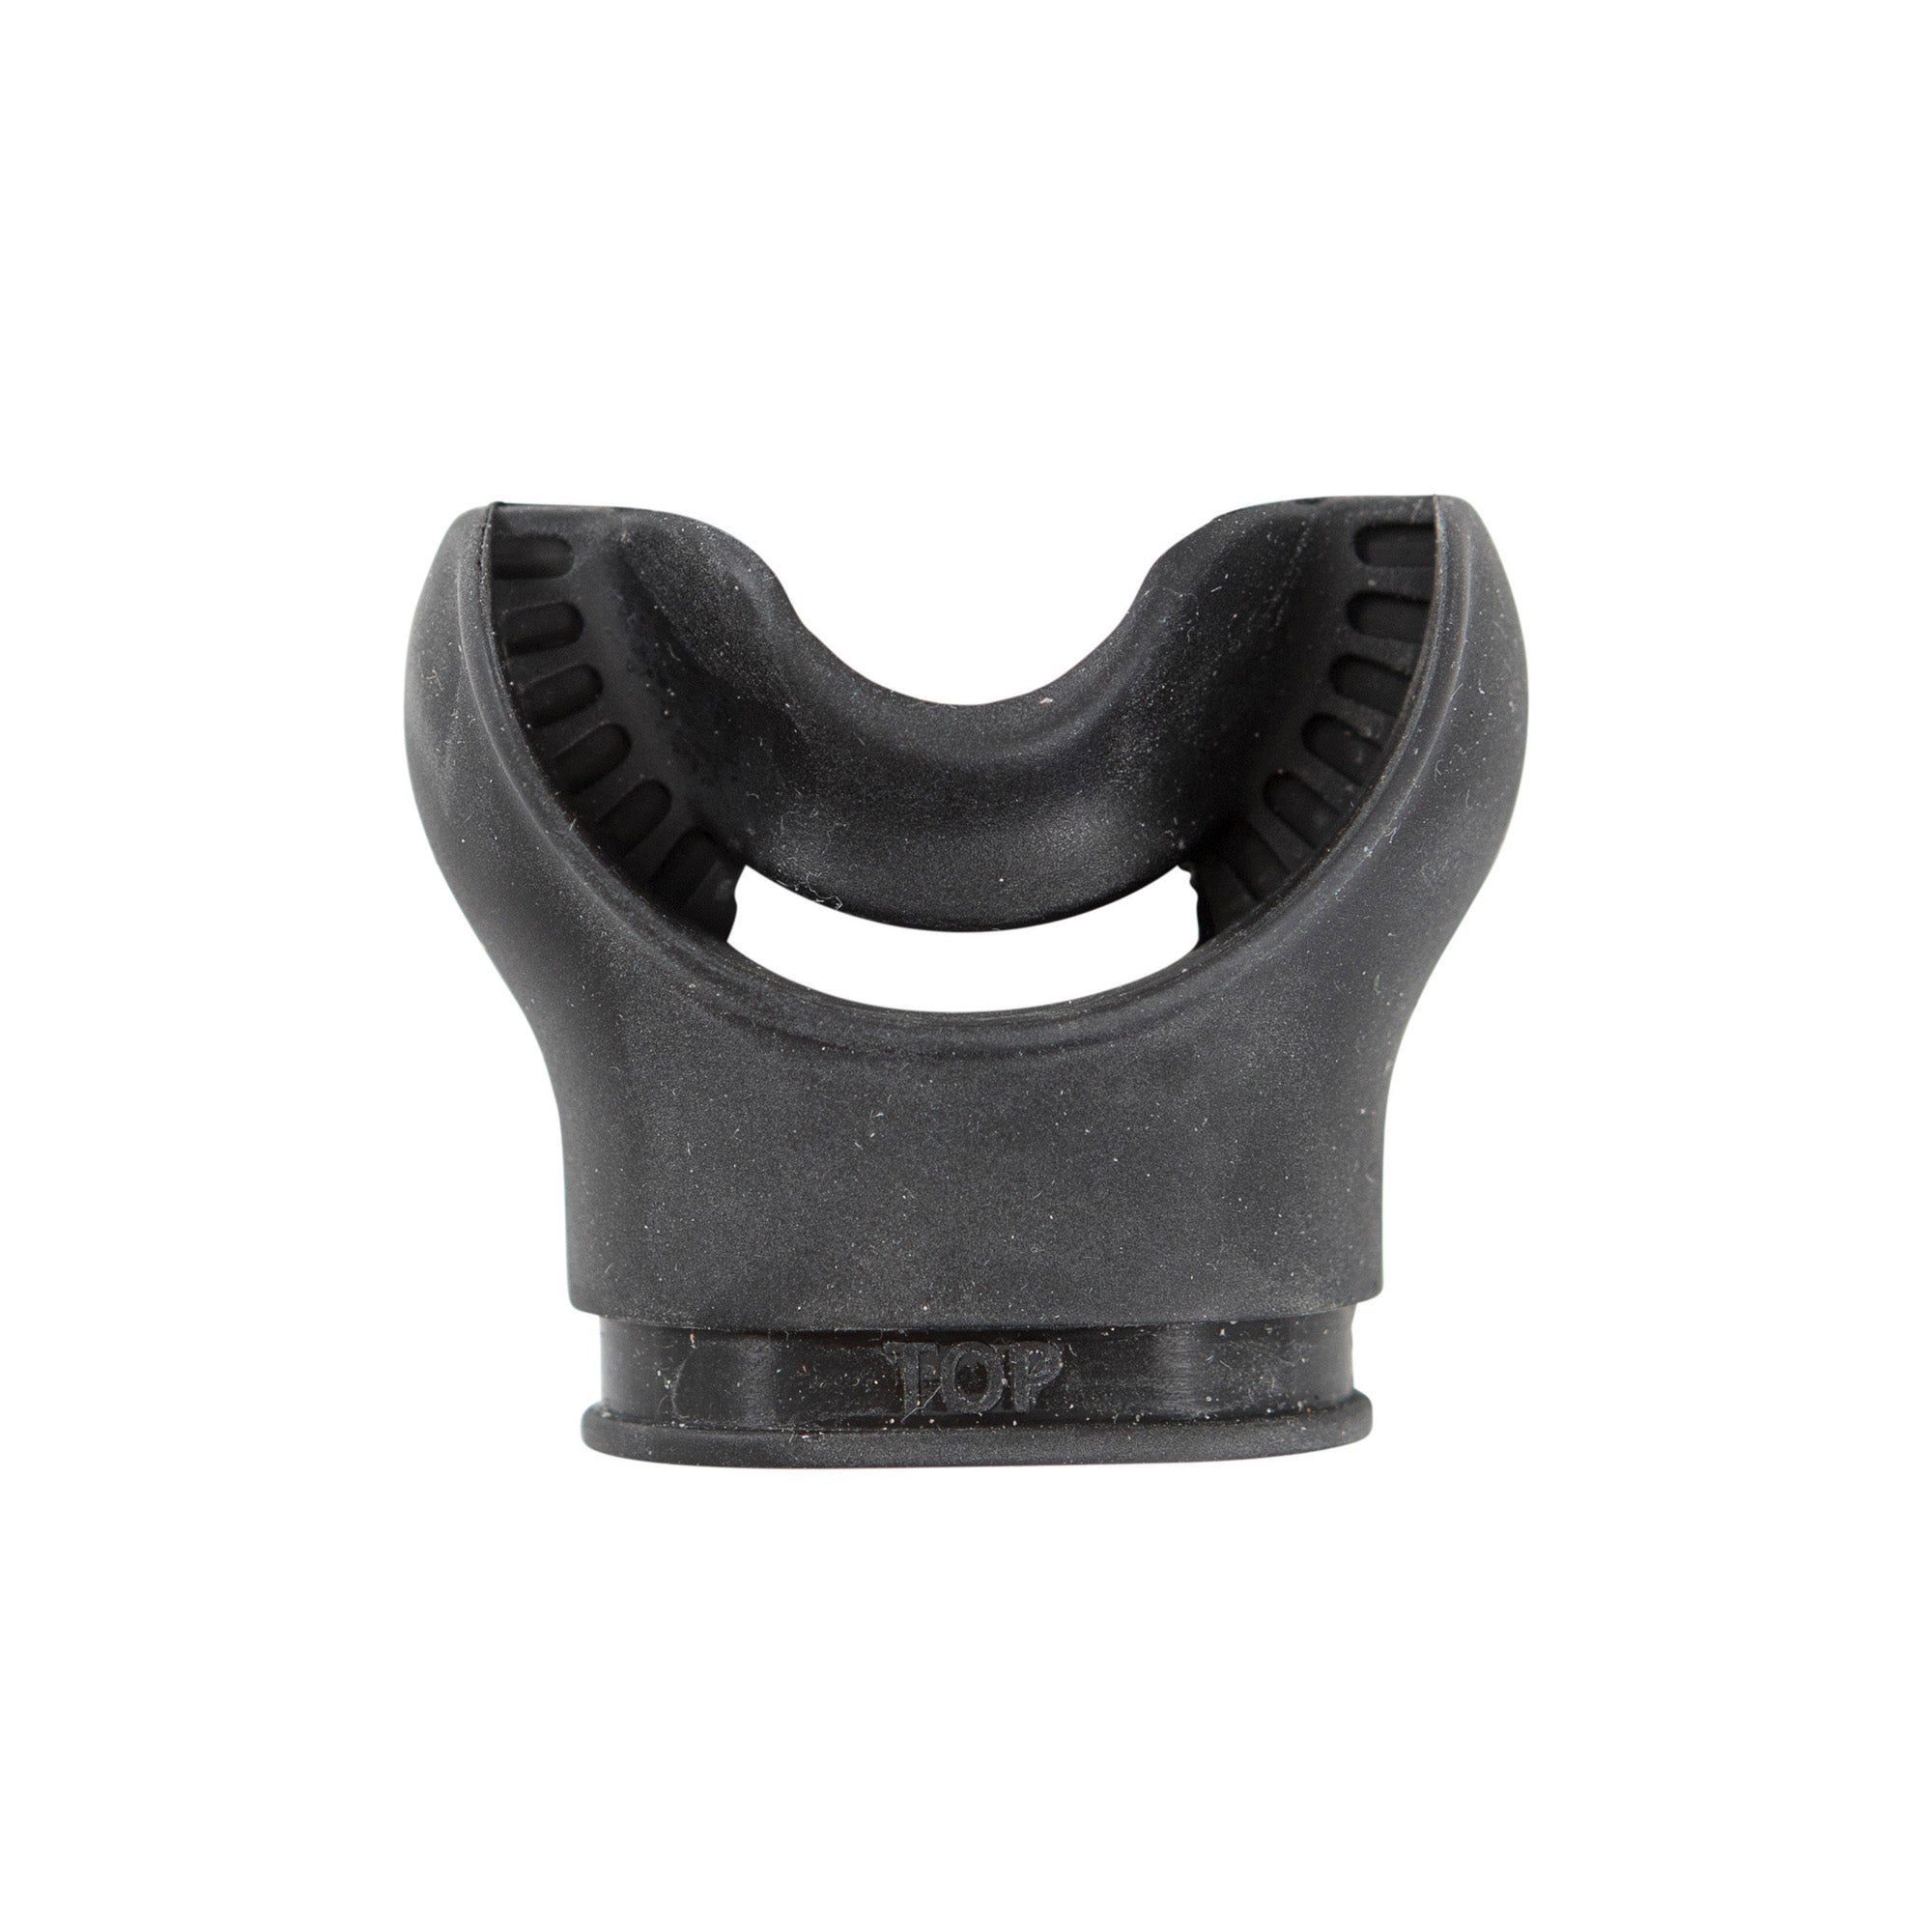 XS Scuba Comfy bite mouthpiece – Aqua Sport Scuba Center